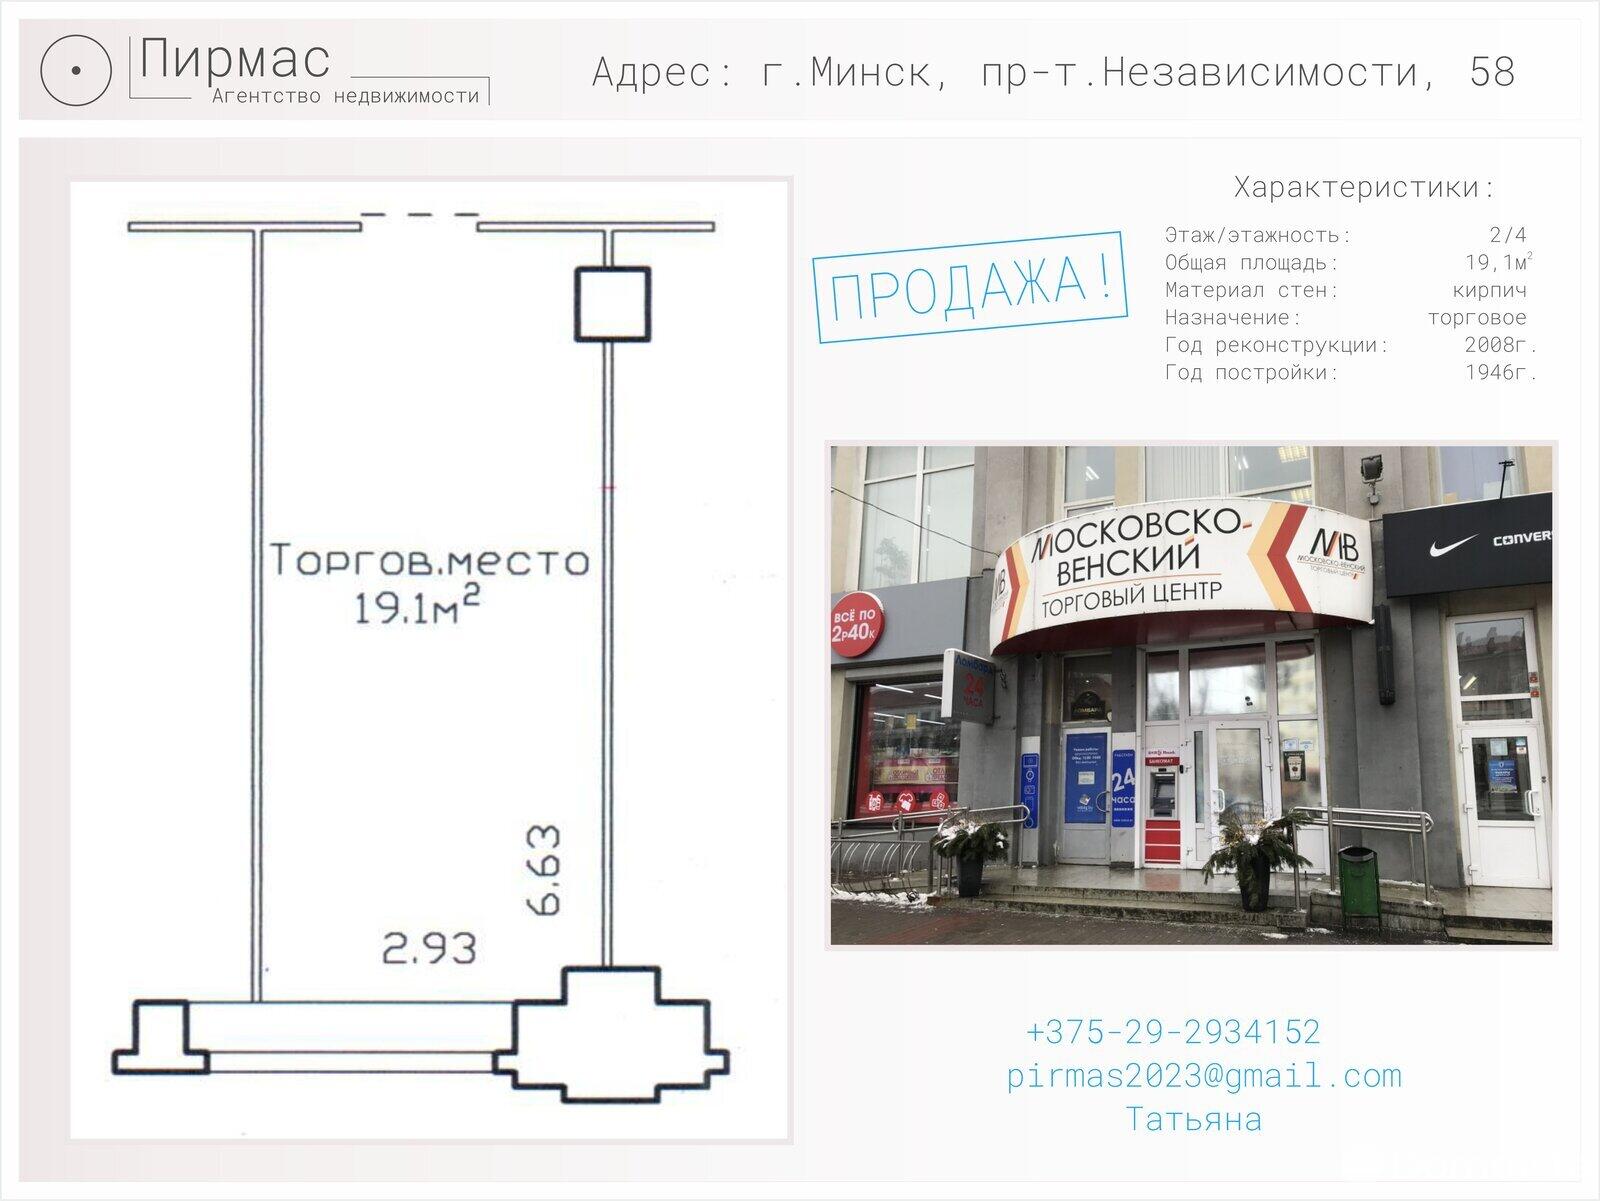 Продажа торговой точки на пр-т Независимости, д. 58 в Минске, 25000USD, код 995611 - фото 2